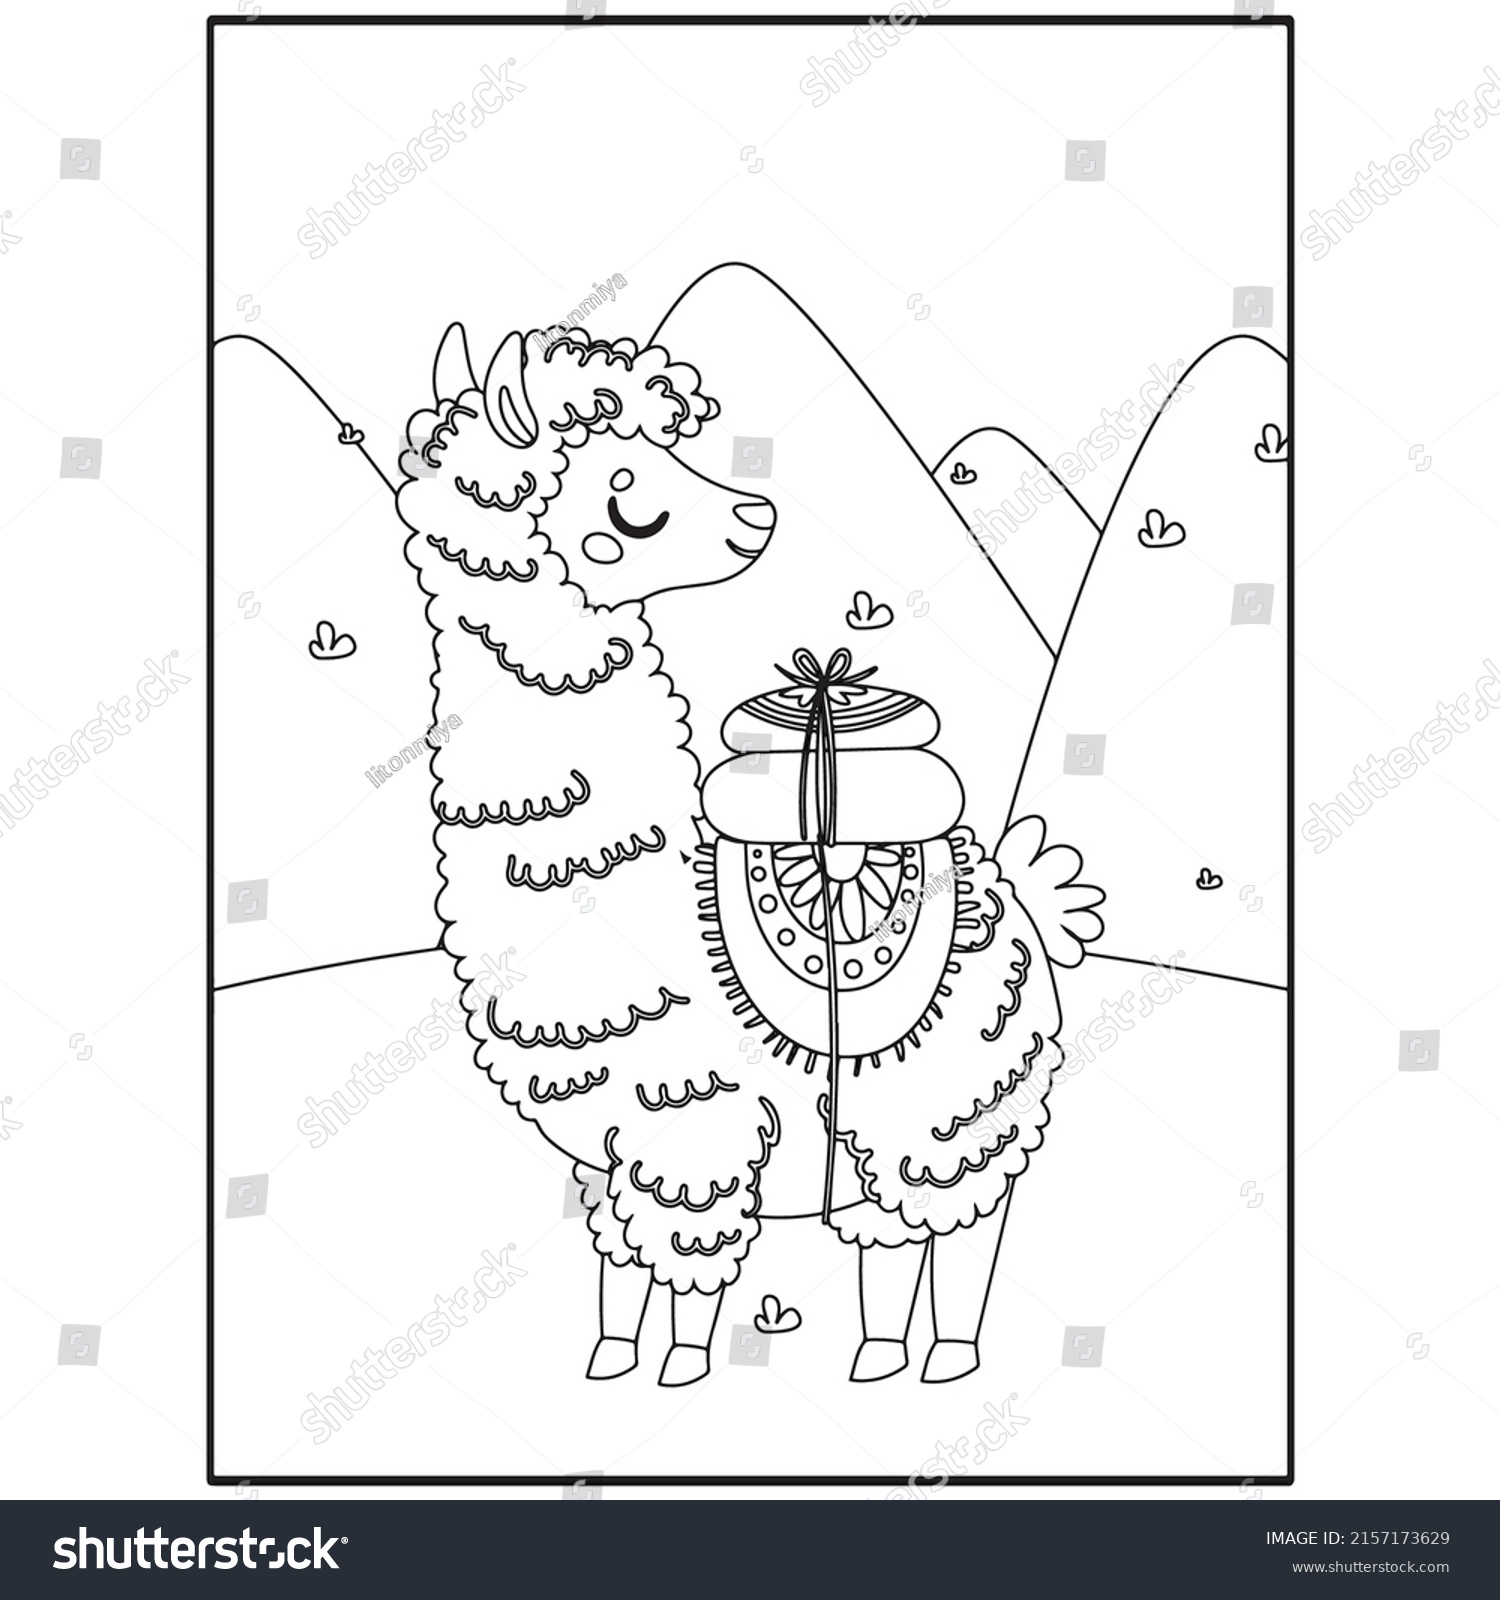 Llama Coloring Pages Kids Stock Vector (Royalty Free) 2157173629 ...